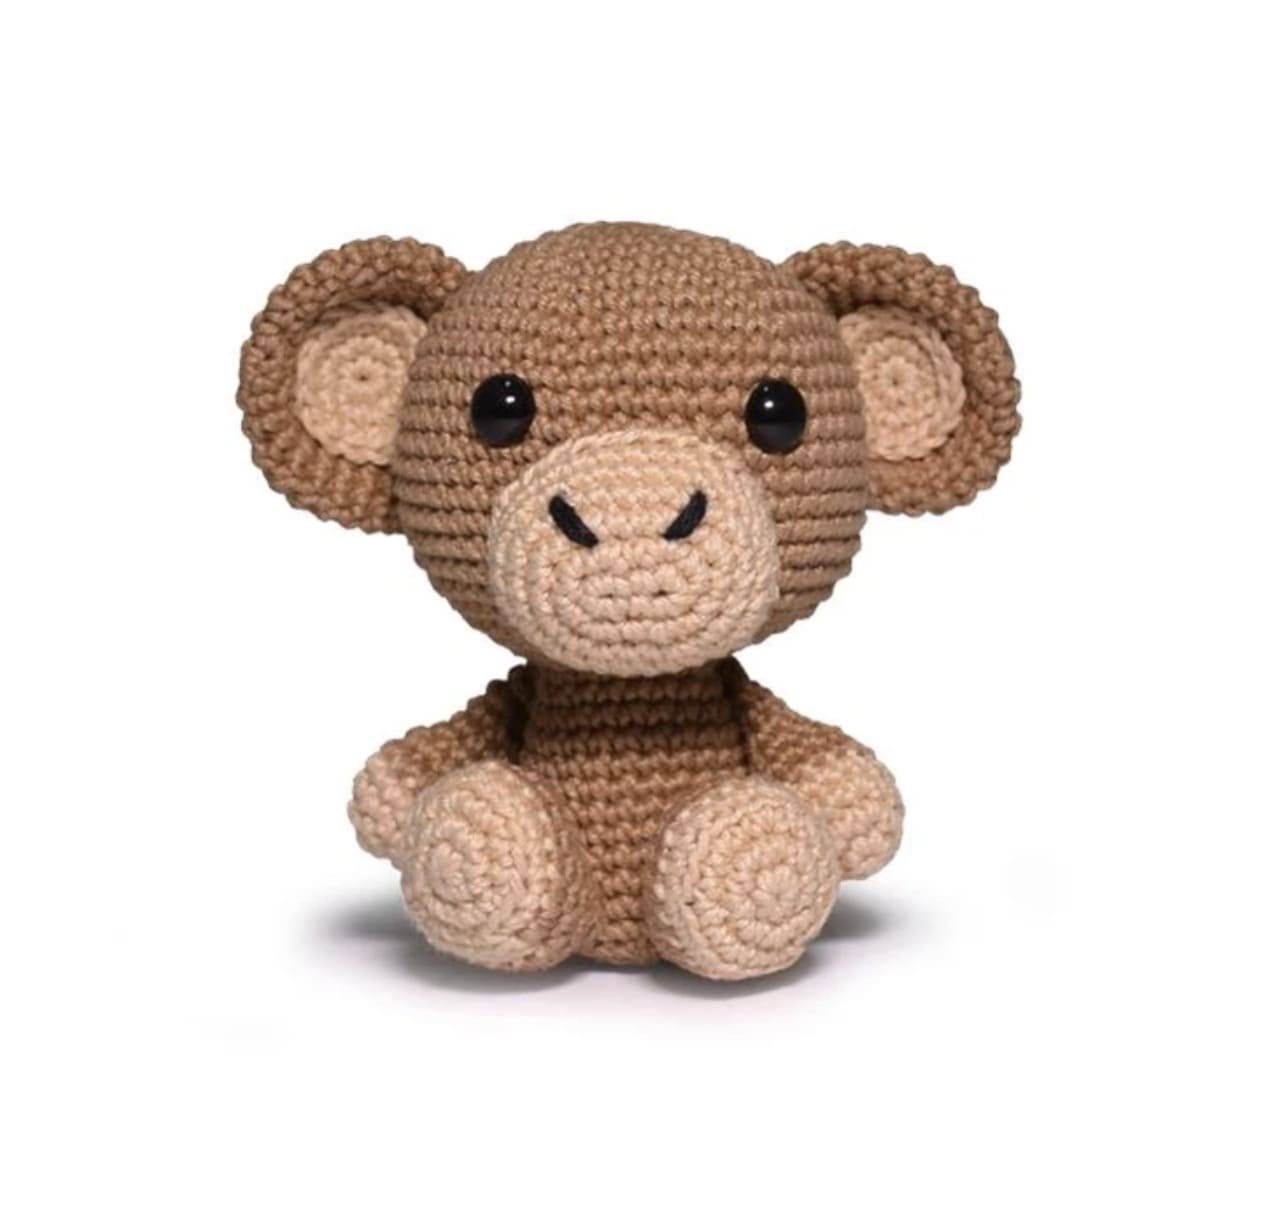 Circulo Safari Amigurumi Crochet Kit - Monkey